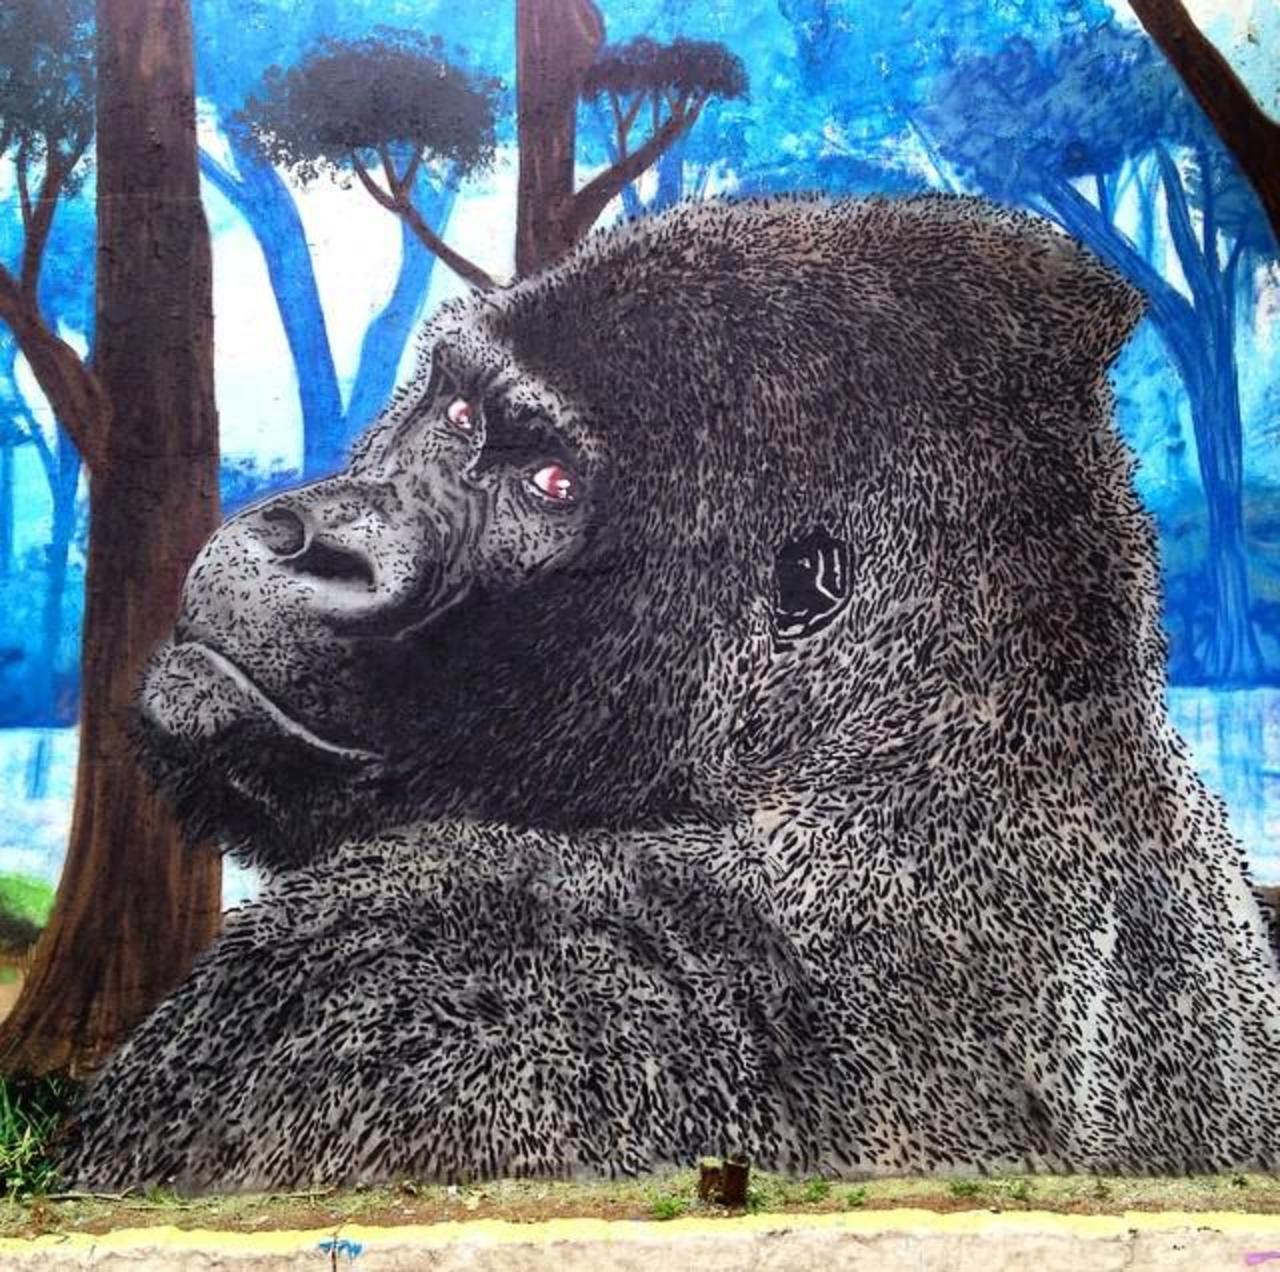 Superb Nature in Street Art piece by Thassio in São Paulo, Brazil  

#art #mural #graffiti #streetart http://t.co/MlzwTHmGFG